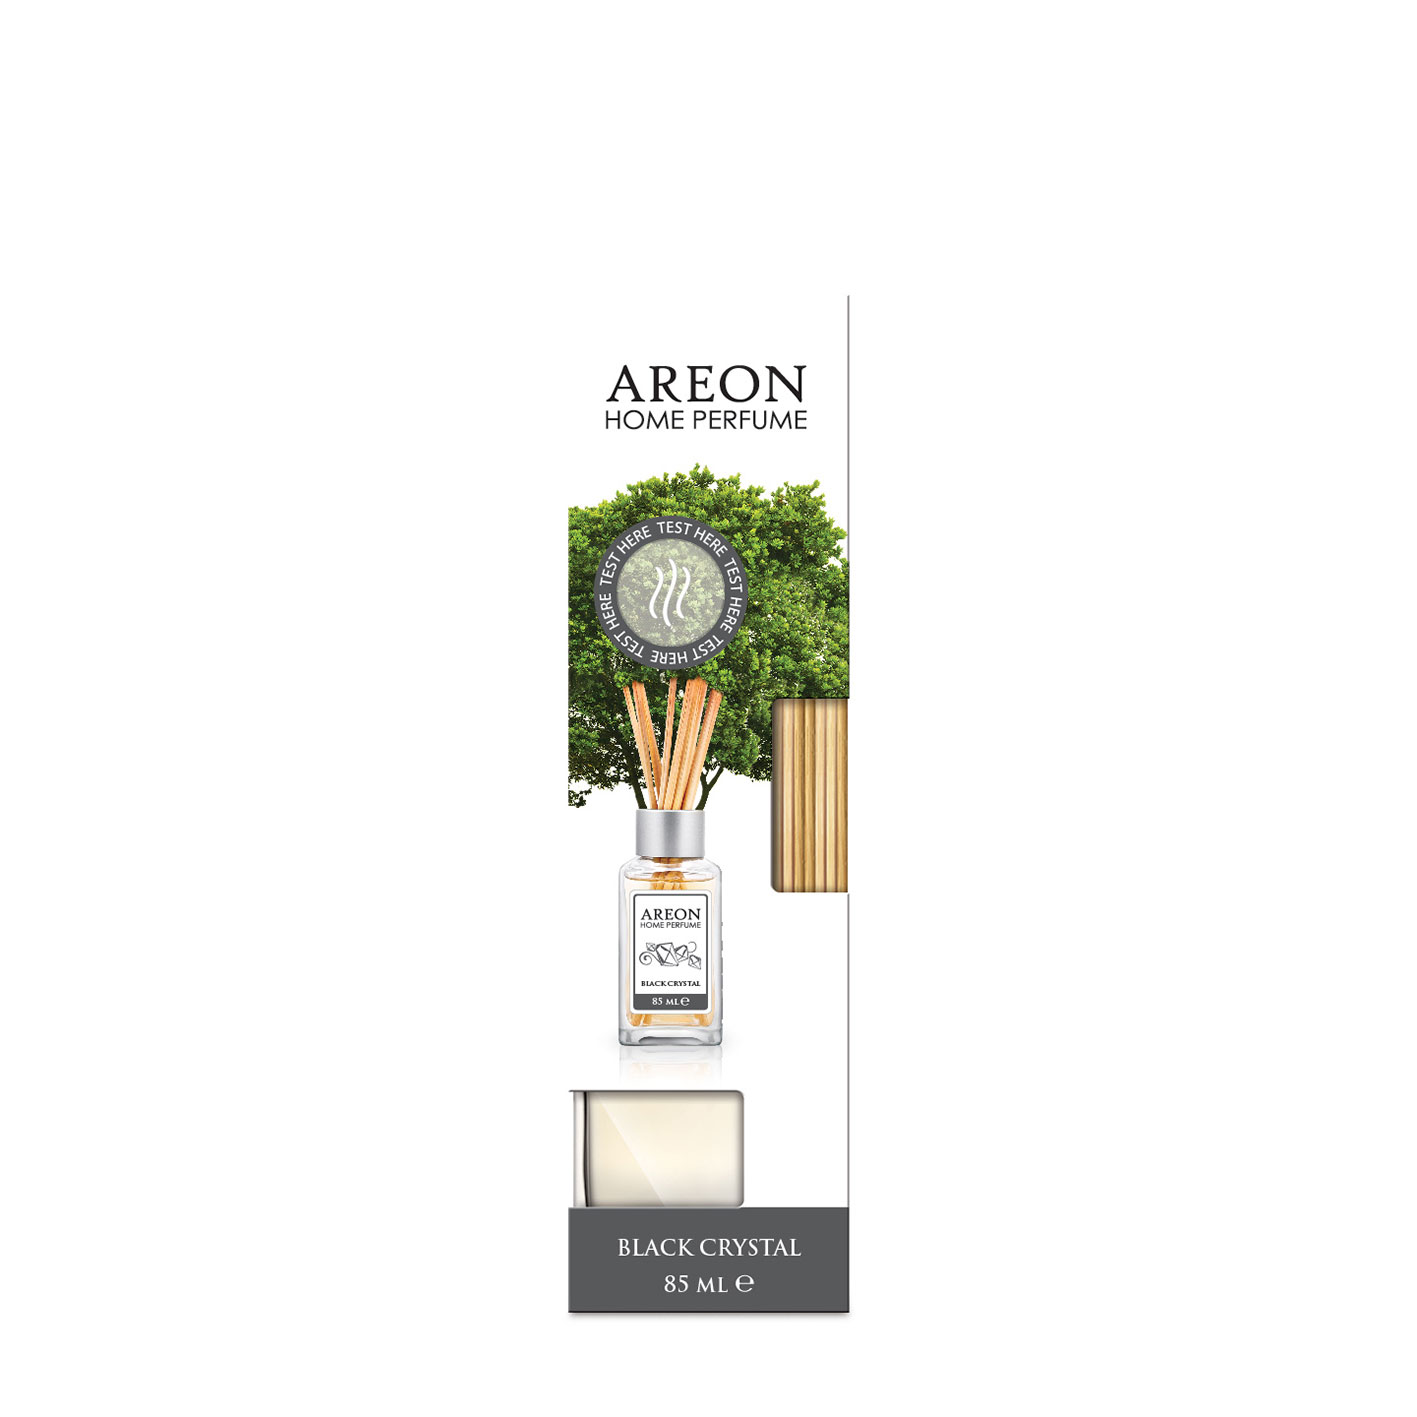 Areon Home Perfume 85ml Black Crystal